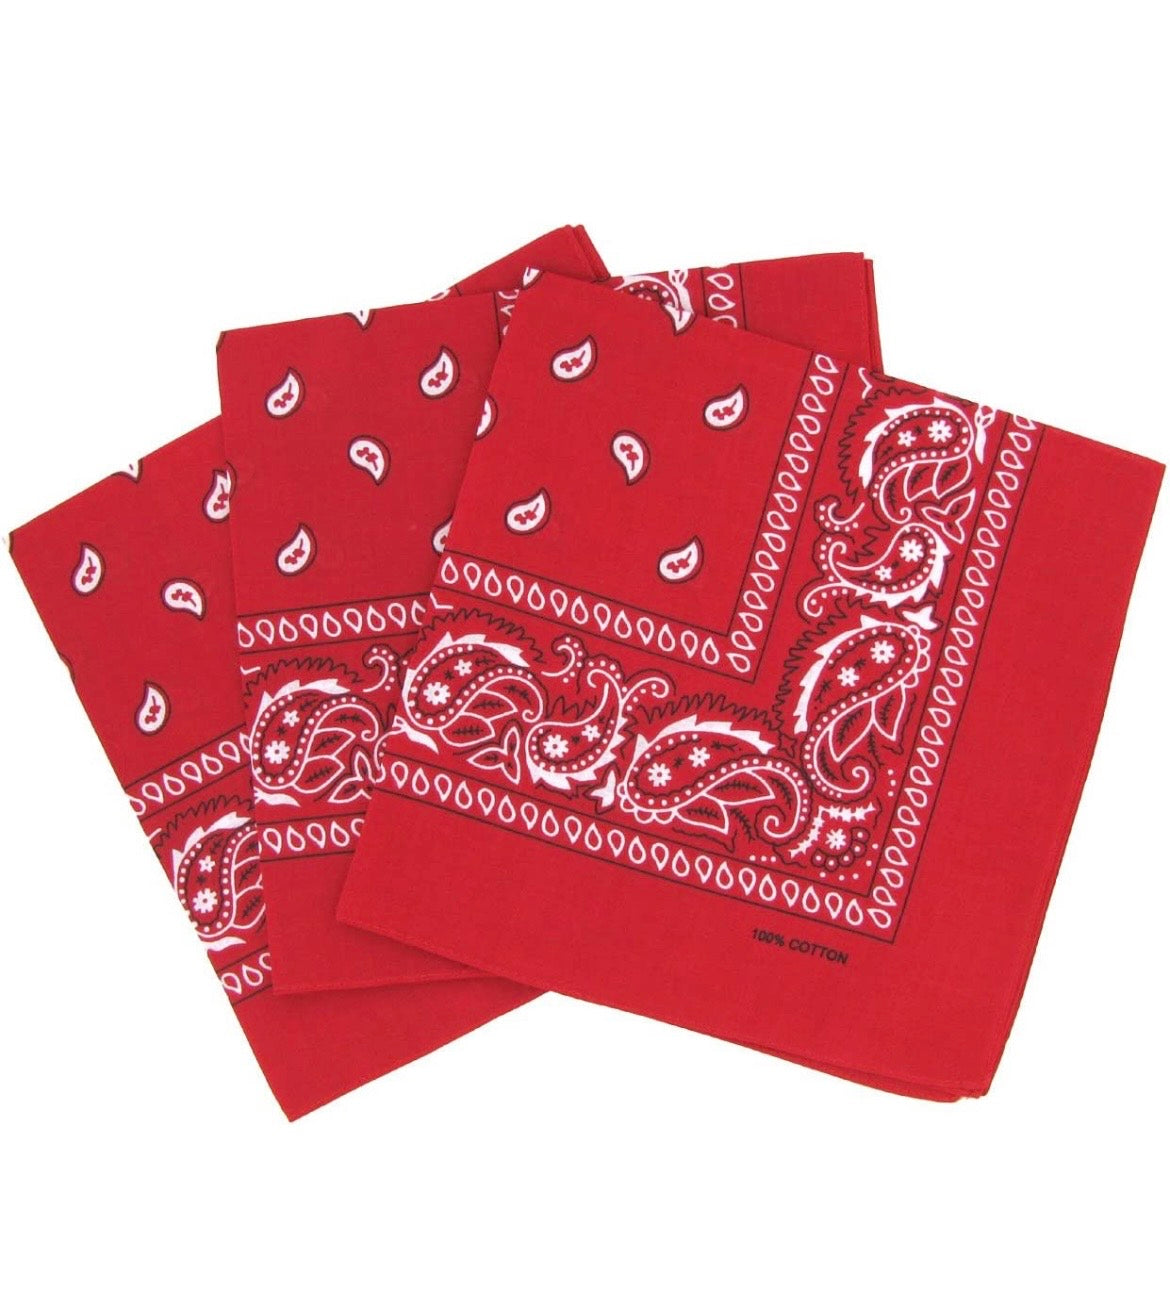 Retro vintage style traditional red bandana